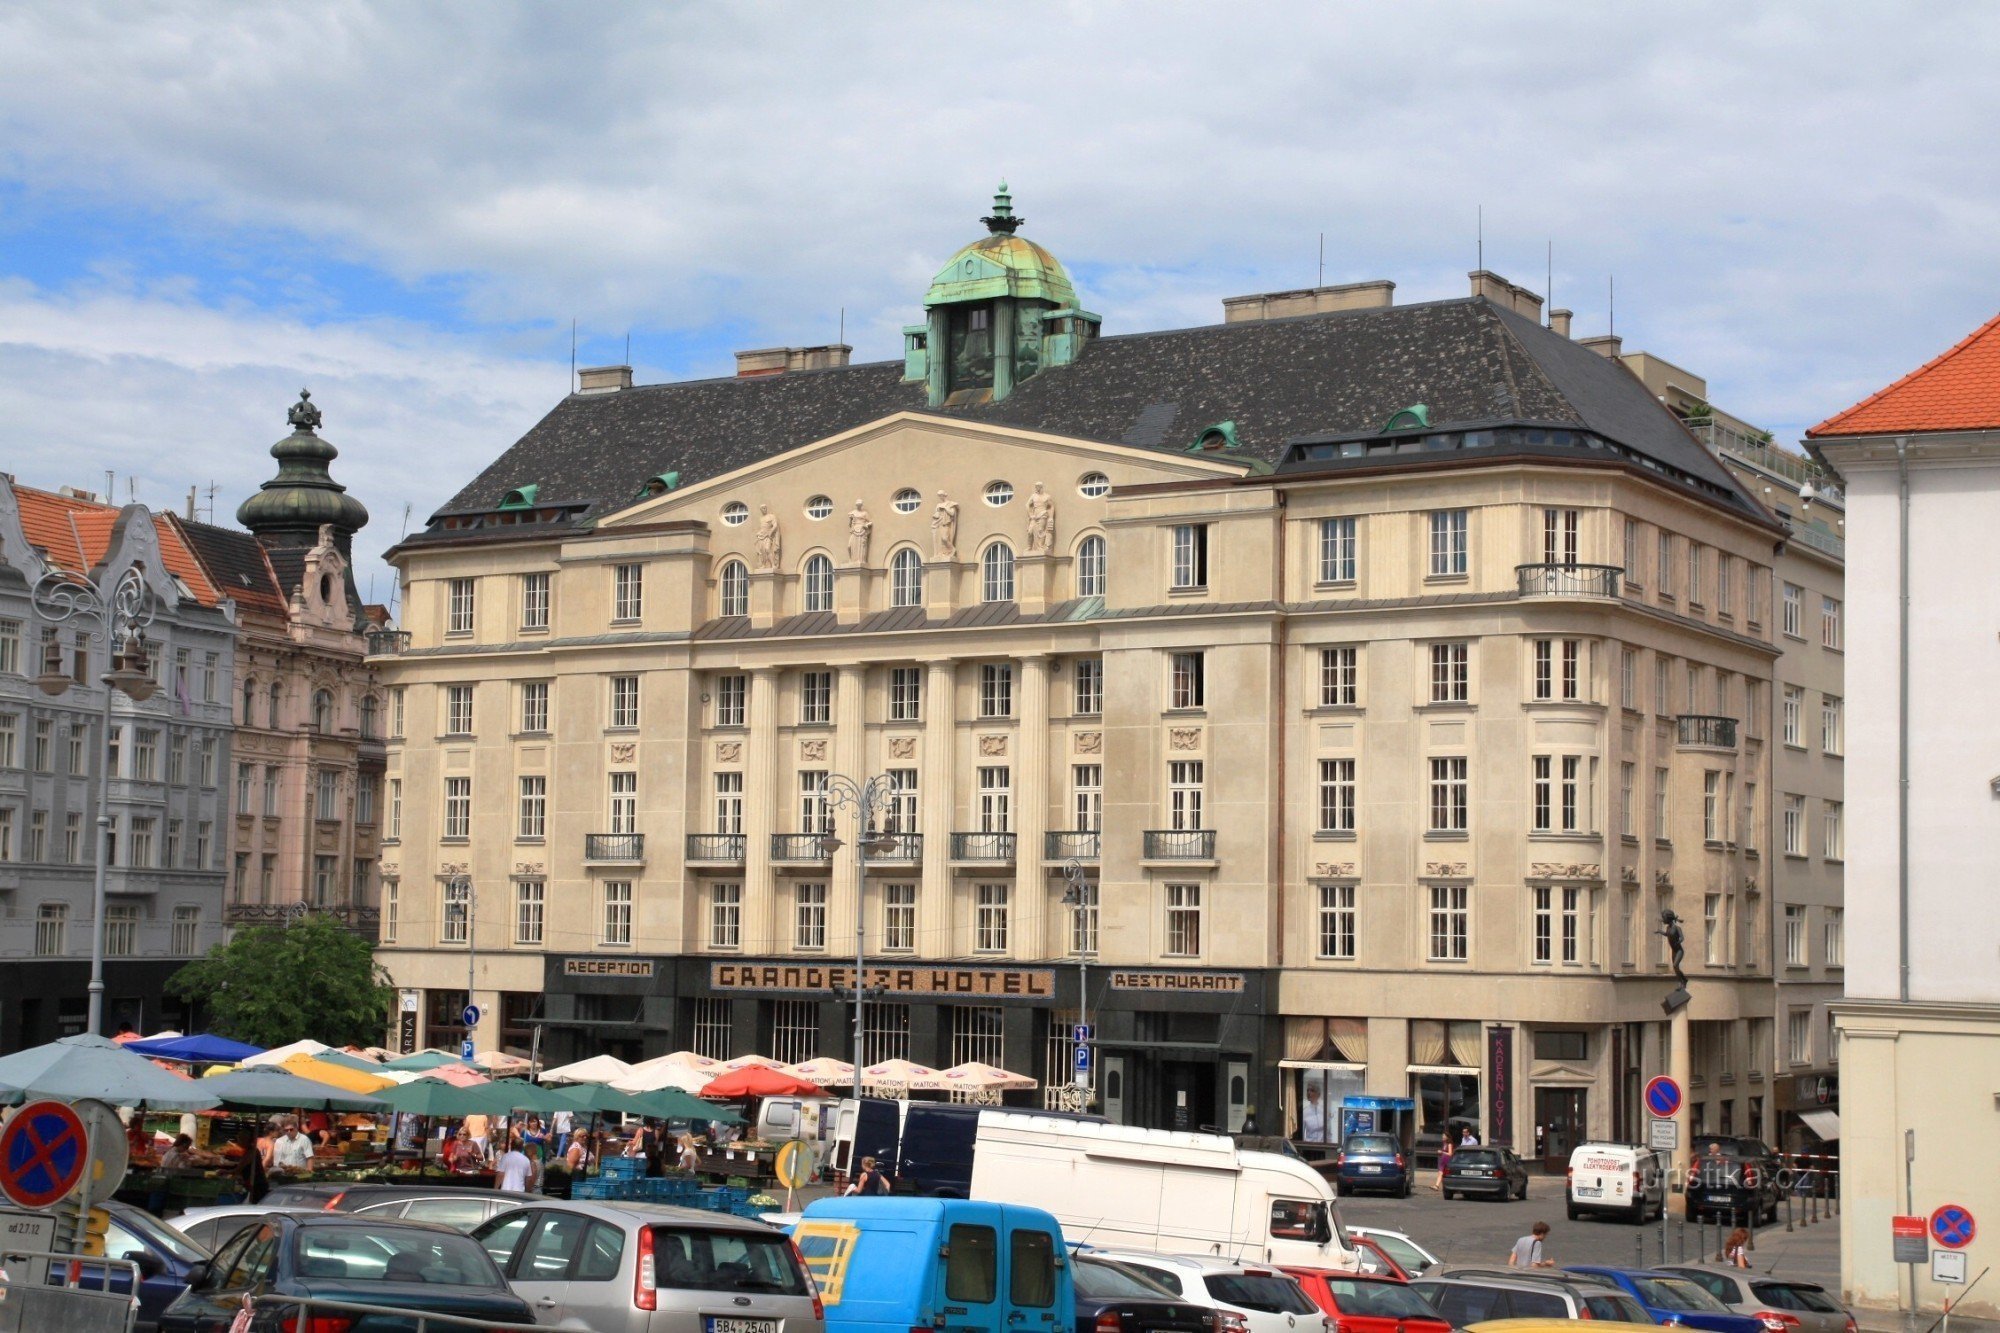 Brno - ehemalige Cyrilometodejská zálažna, heute Hotel Grandezza